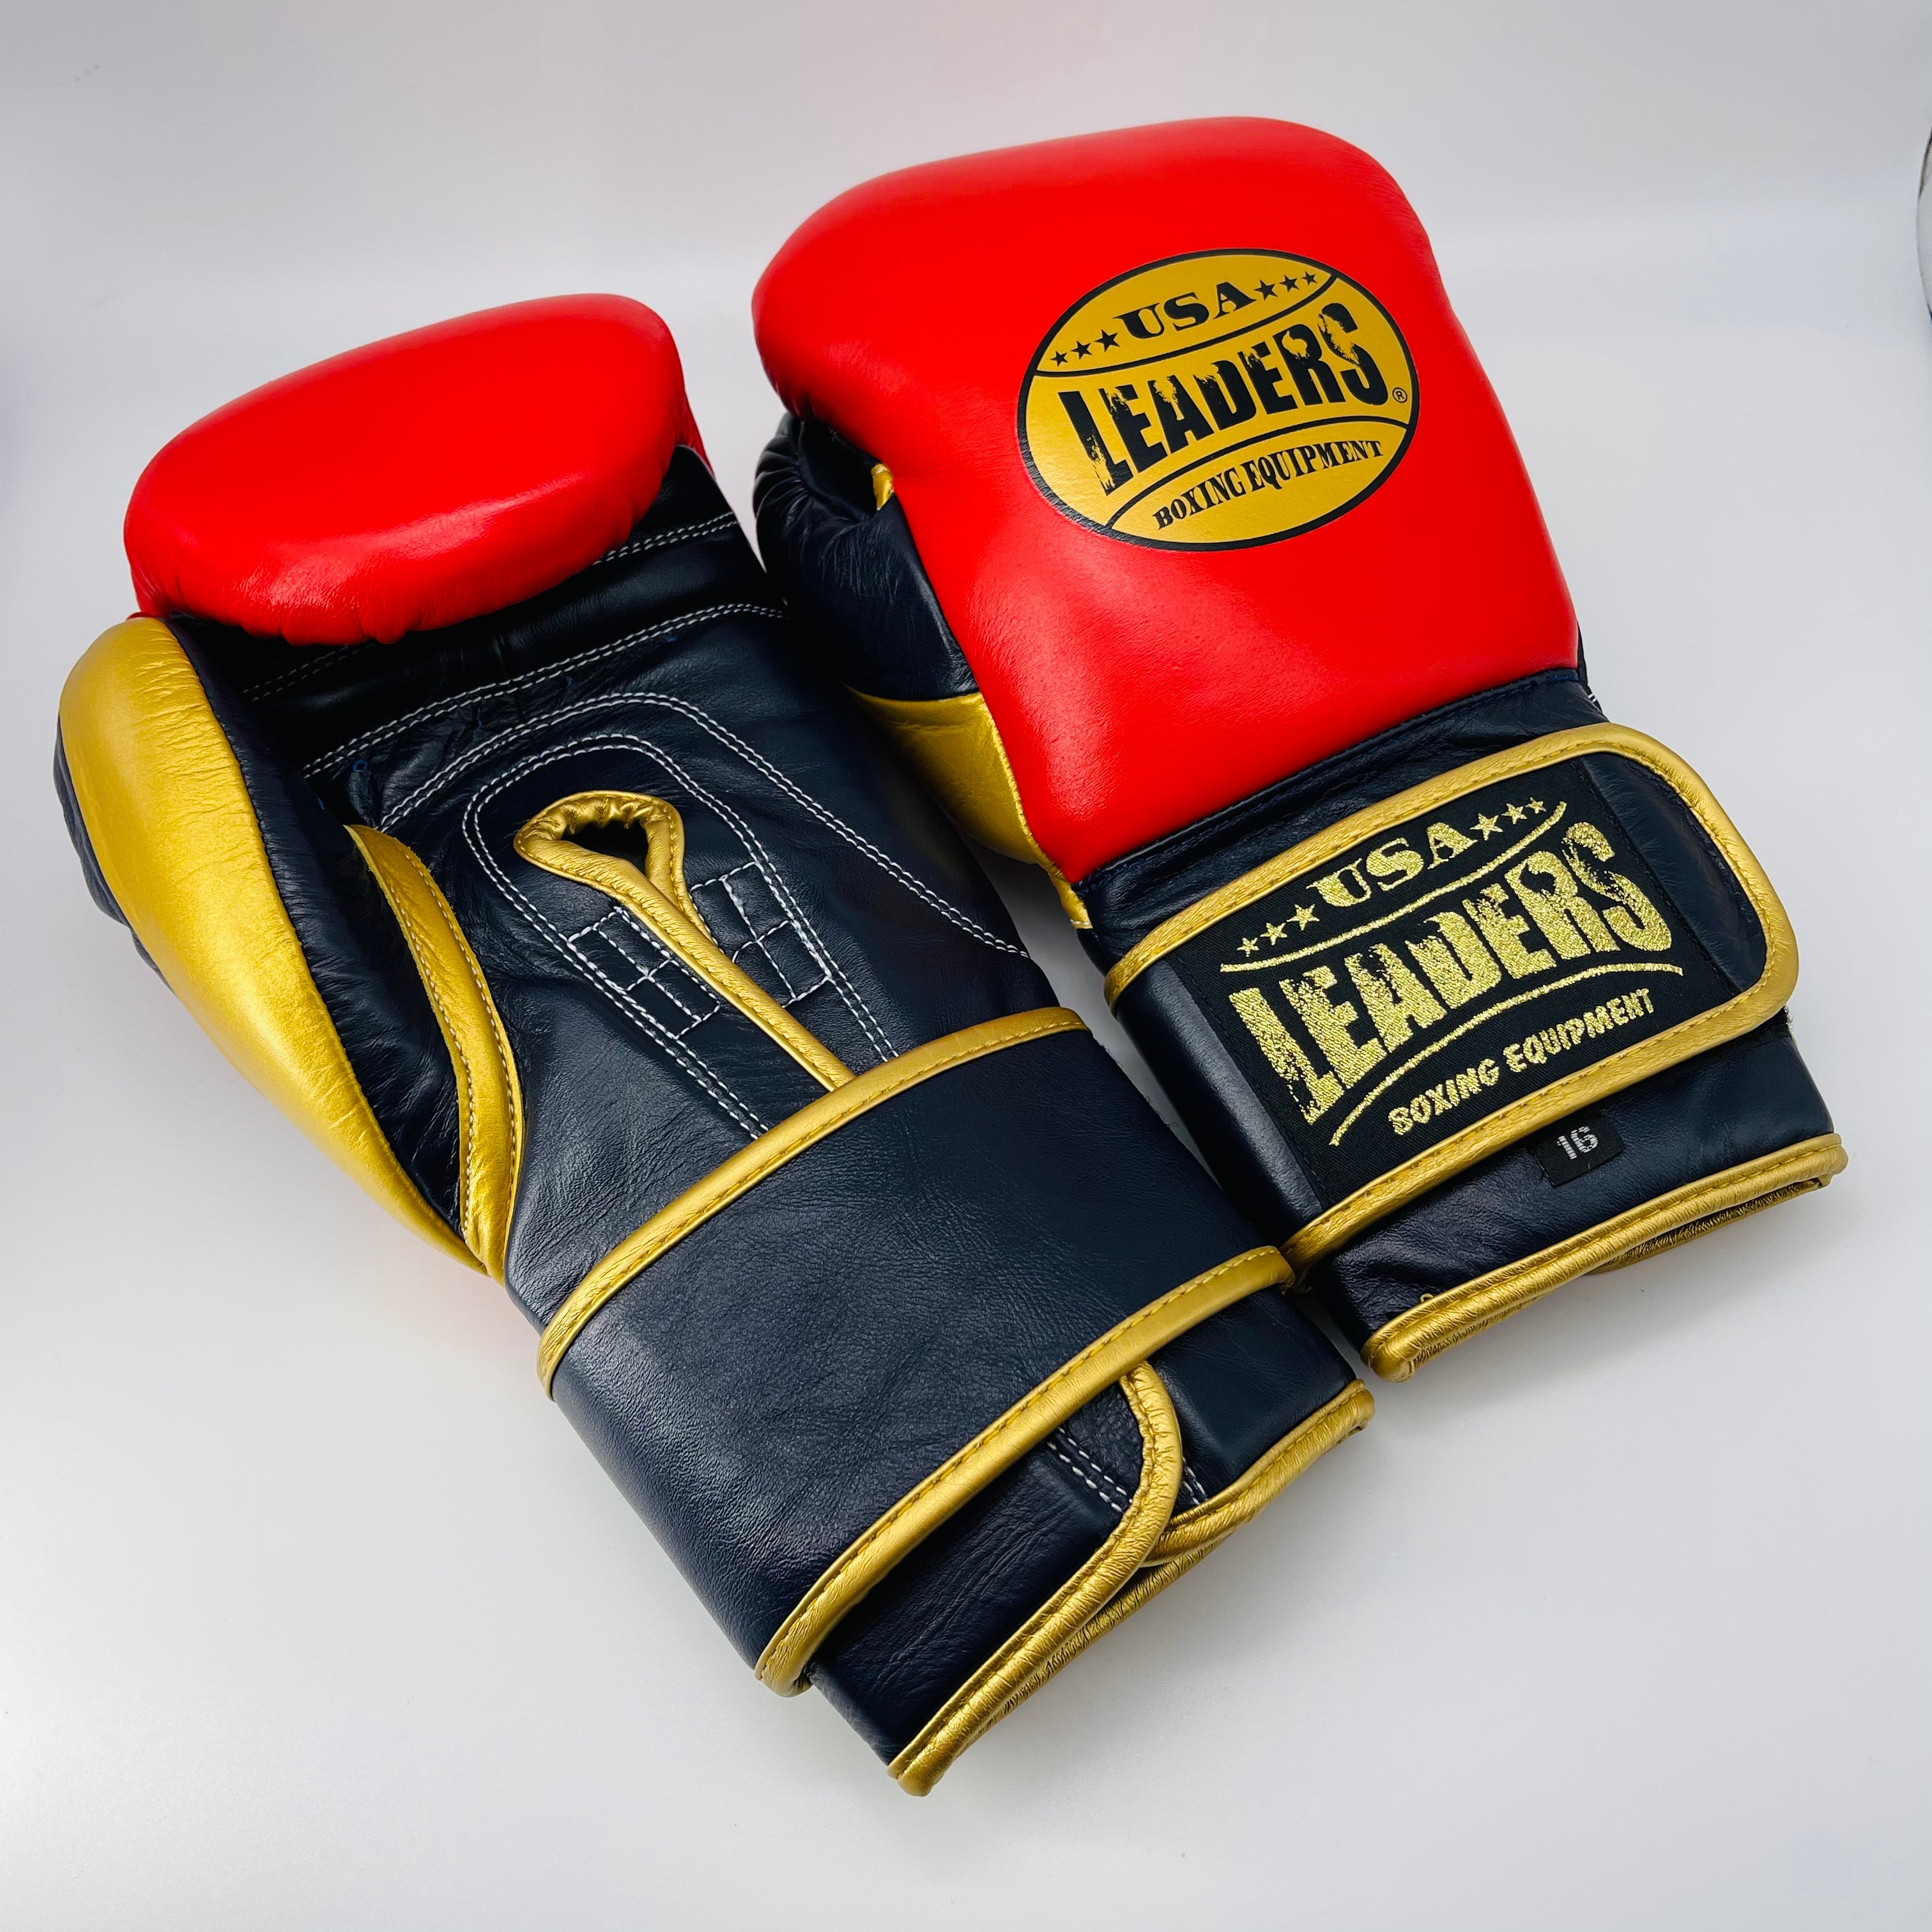 Elite Soft Boxing  Gloves ( Red/Gold/Navy)